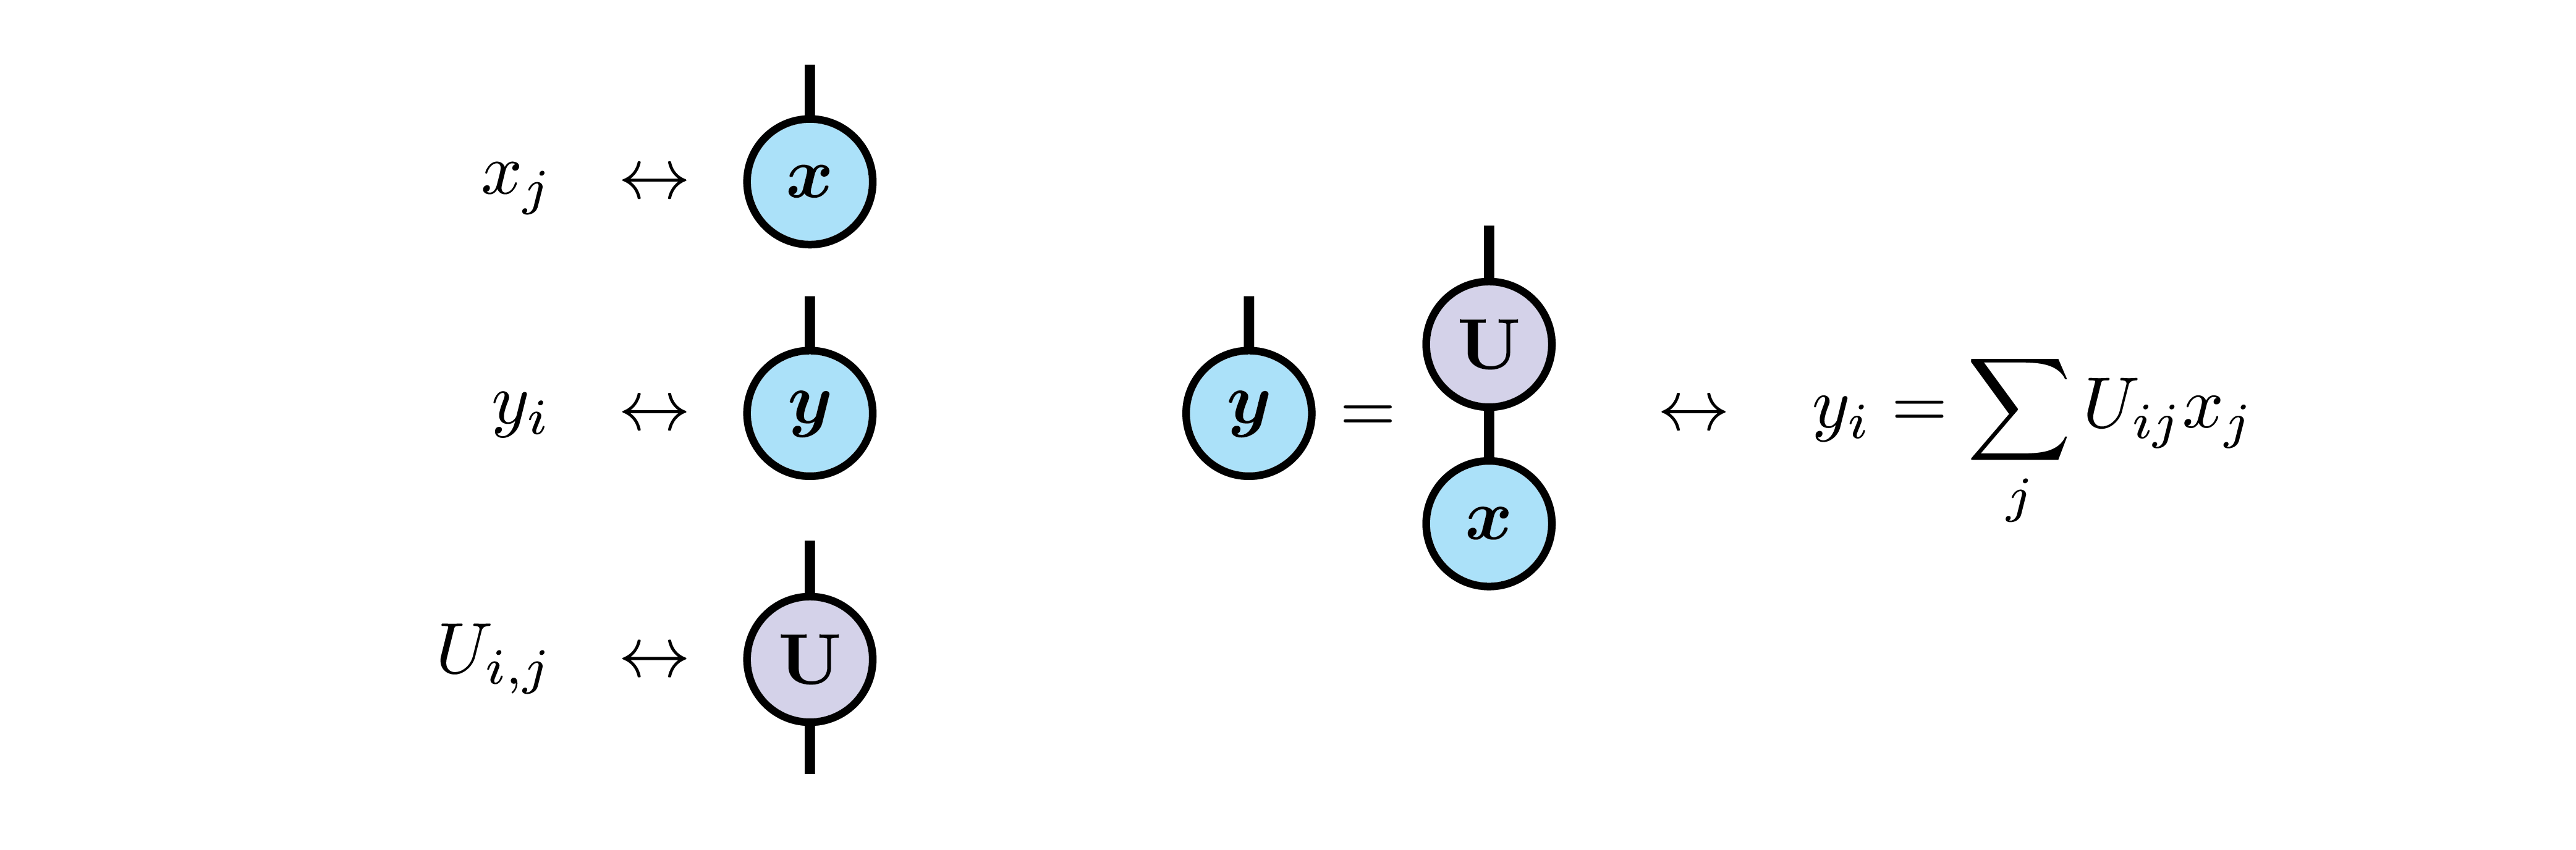 basics of the tensor network notation